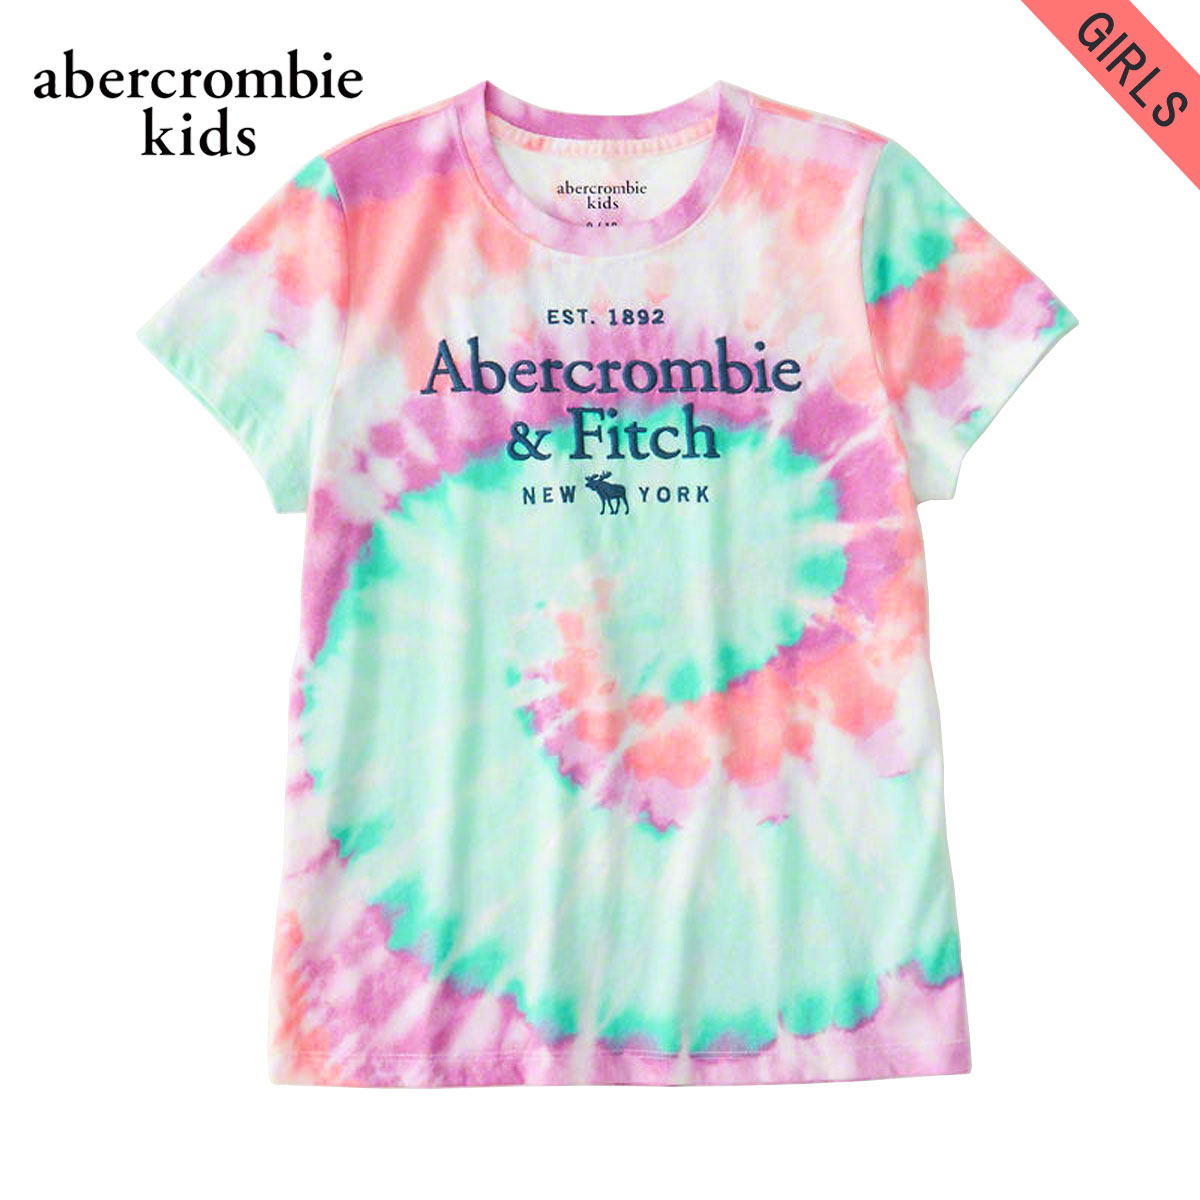 abercrombie kids shirts